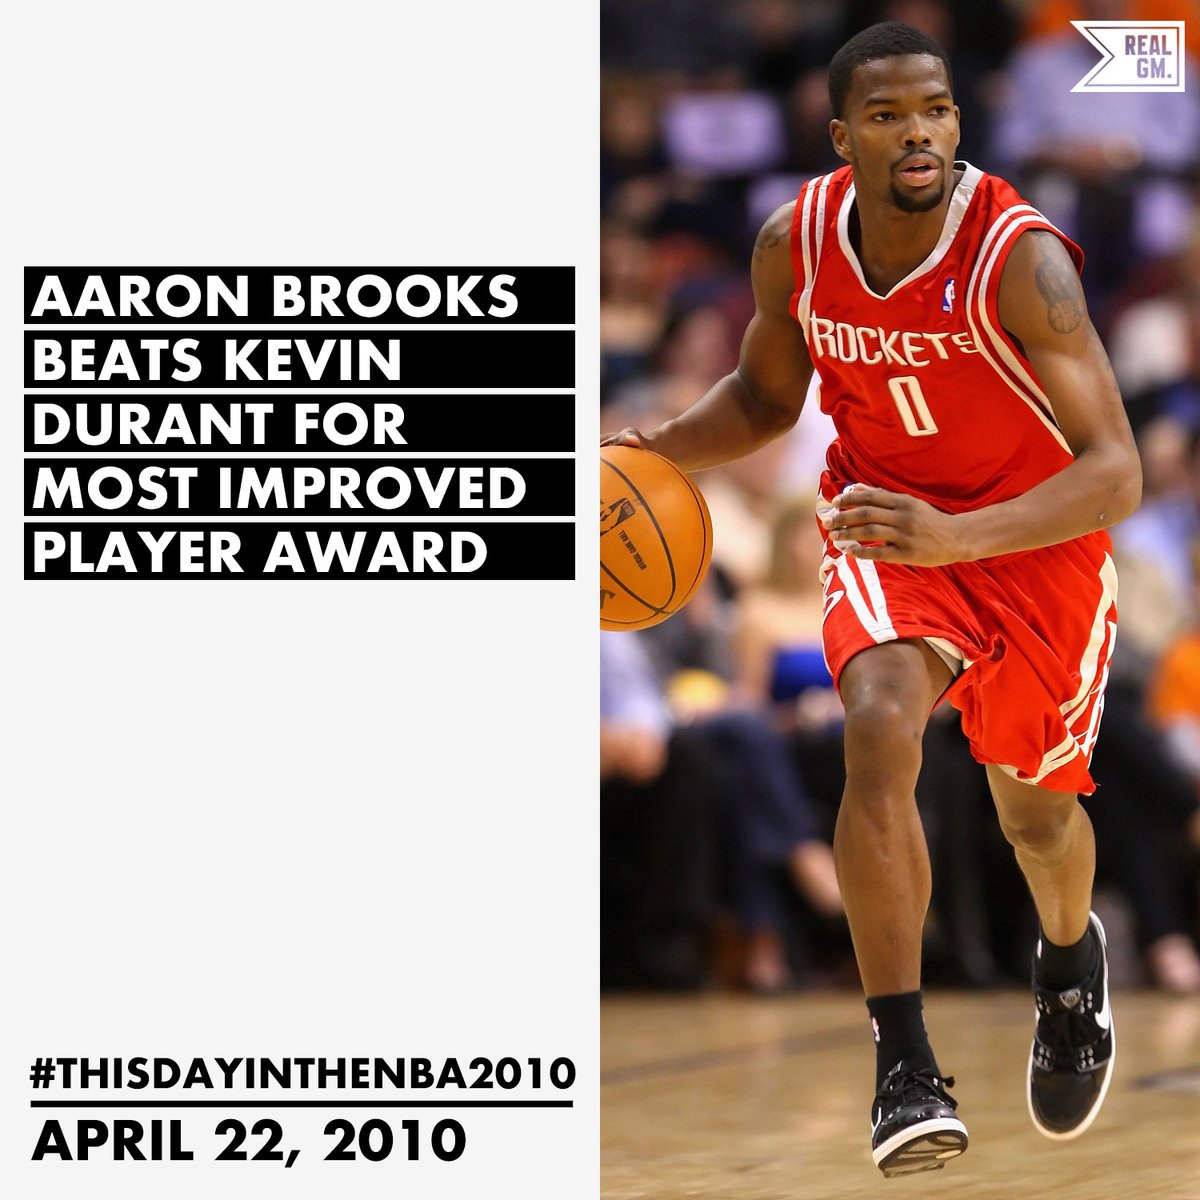  #ThisDayInTheNBA2010April 22, 2010Aaron Brooks Beats Kevin Durant For Most Improved Player Award https://basketball.realgm.com/wiretap/203451/Aaron-Brooks-Beats-Kevin-Durant-For-Most-Improved-Player-Award